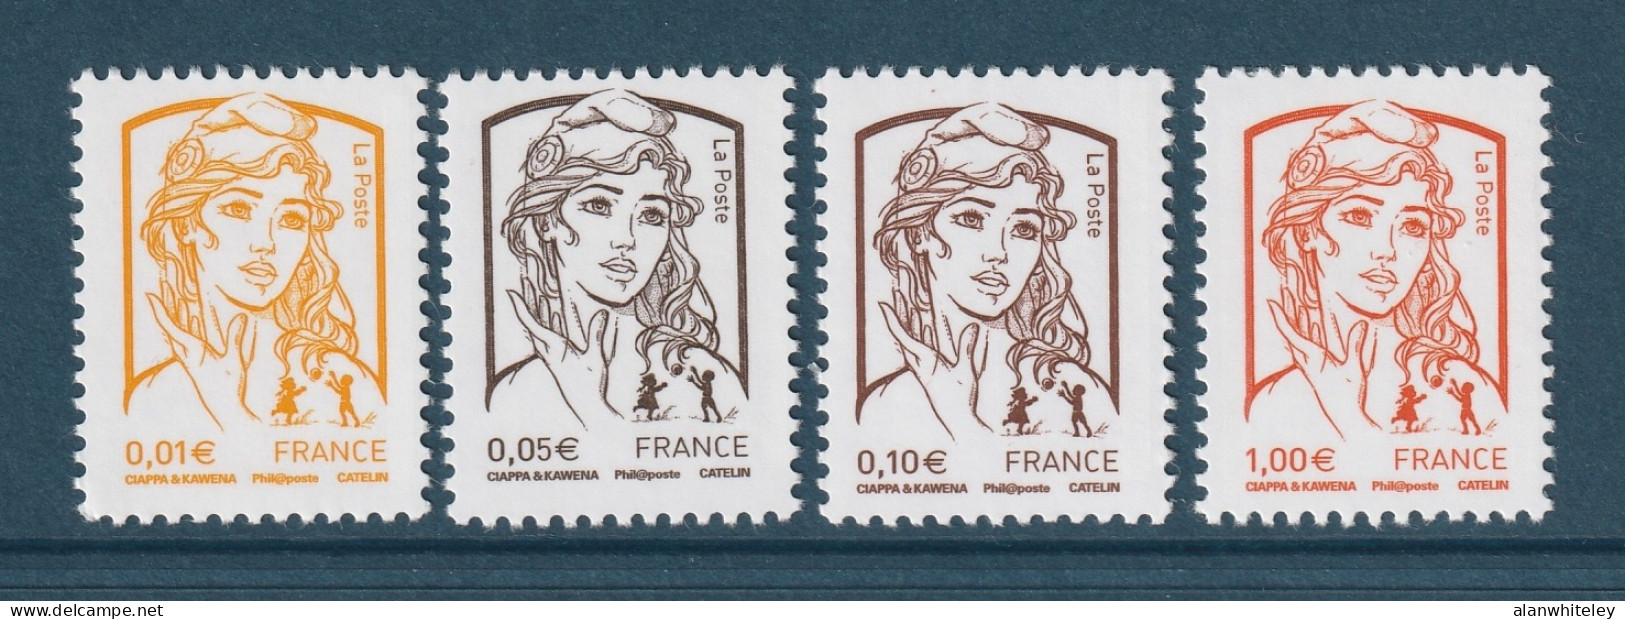 FRANCE 2013 Definitives / Marianne De Ciappa-Kawena 1c/5c/10c/€1: Set Of 4 Stamps UM/MNH - 2013-2018 Marianne Van Ciappa-Kawena